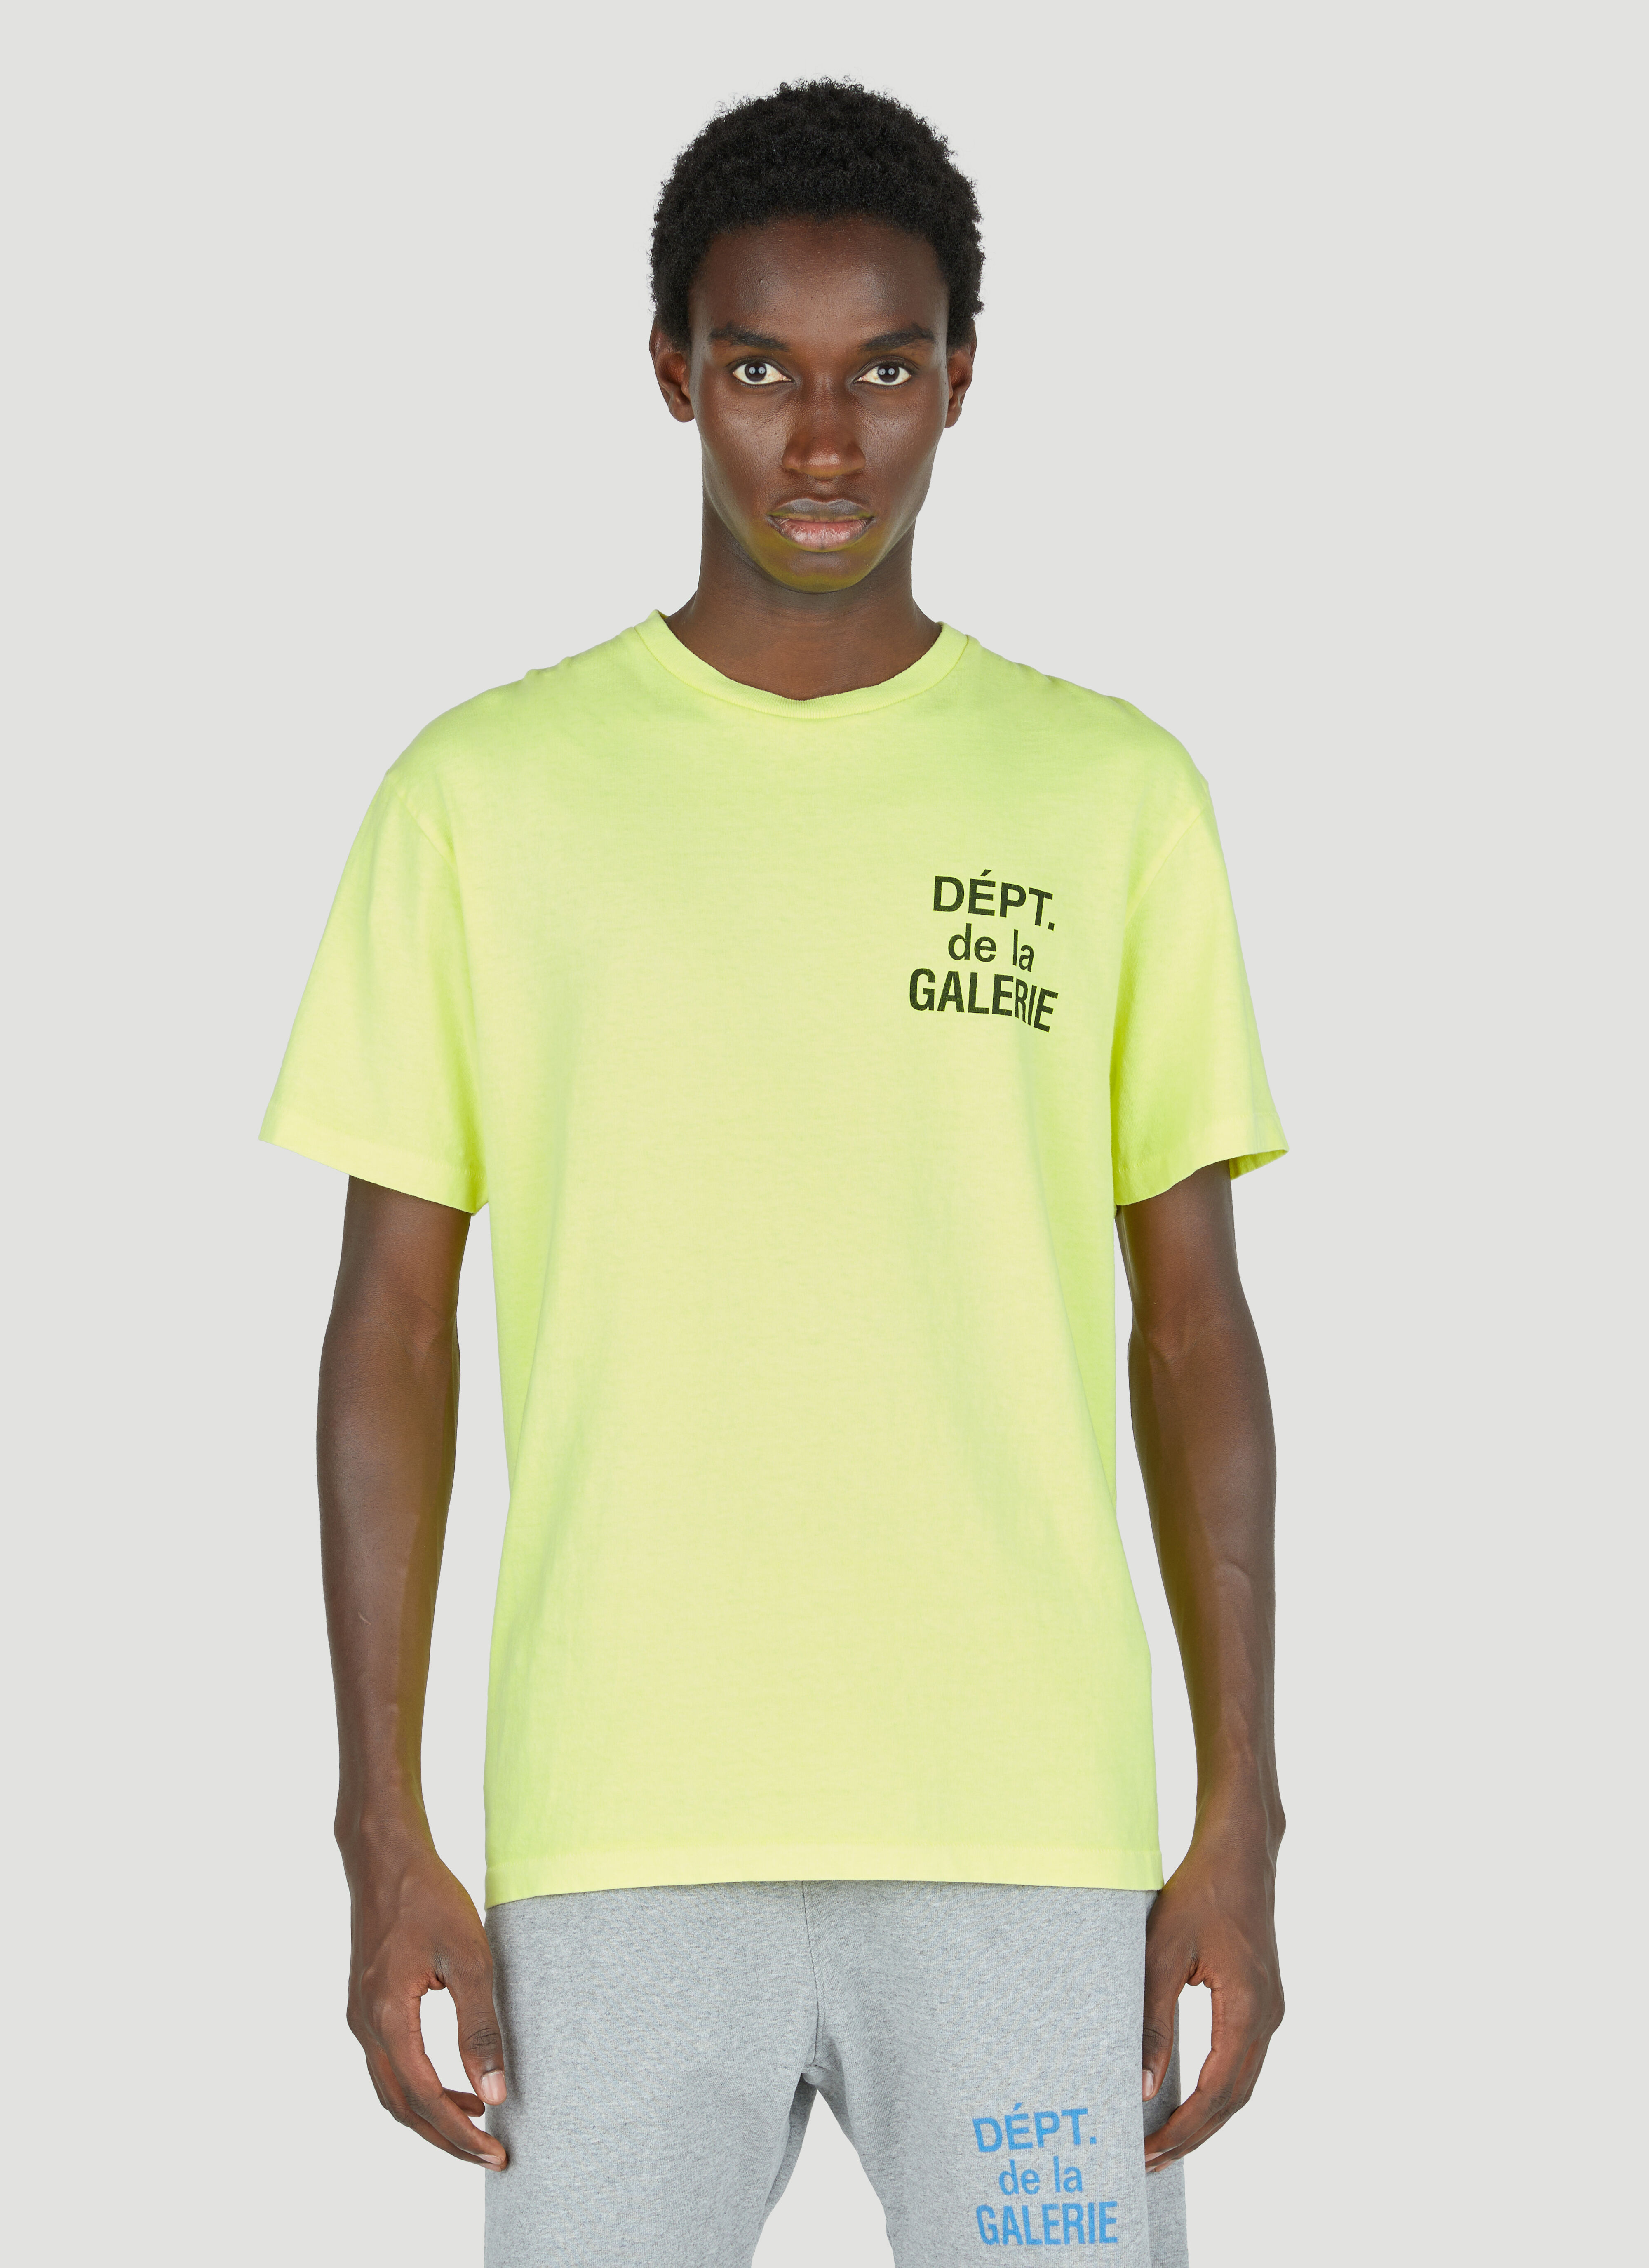 Gallery Dept. French Logo Print T-Shirt in Yellow | LN-CC®